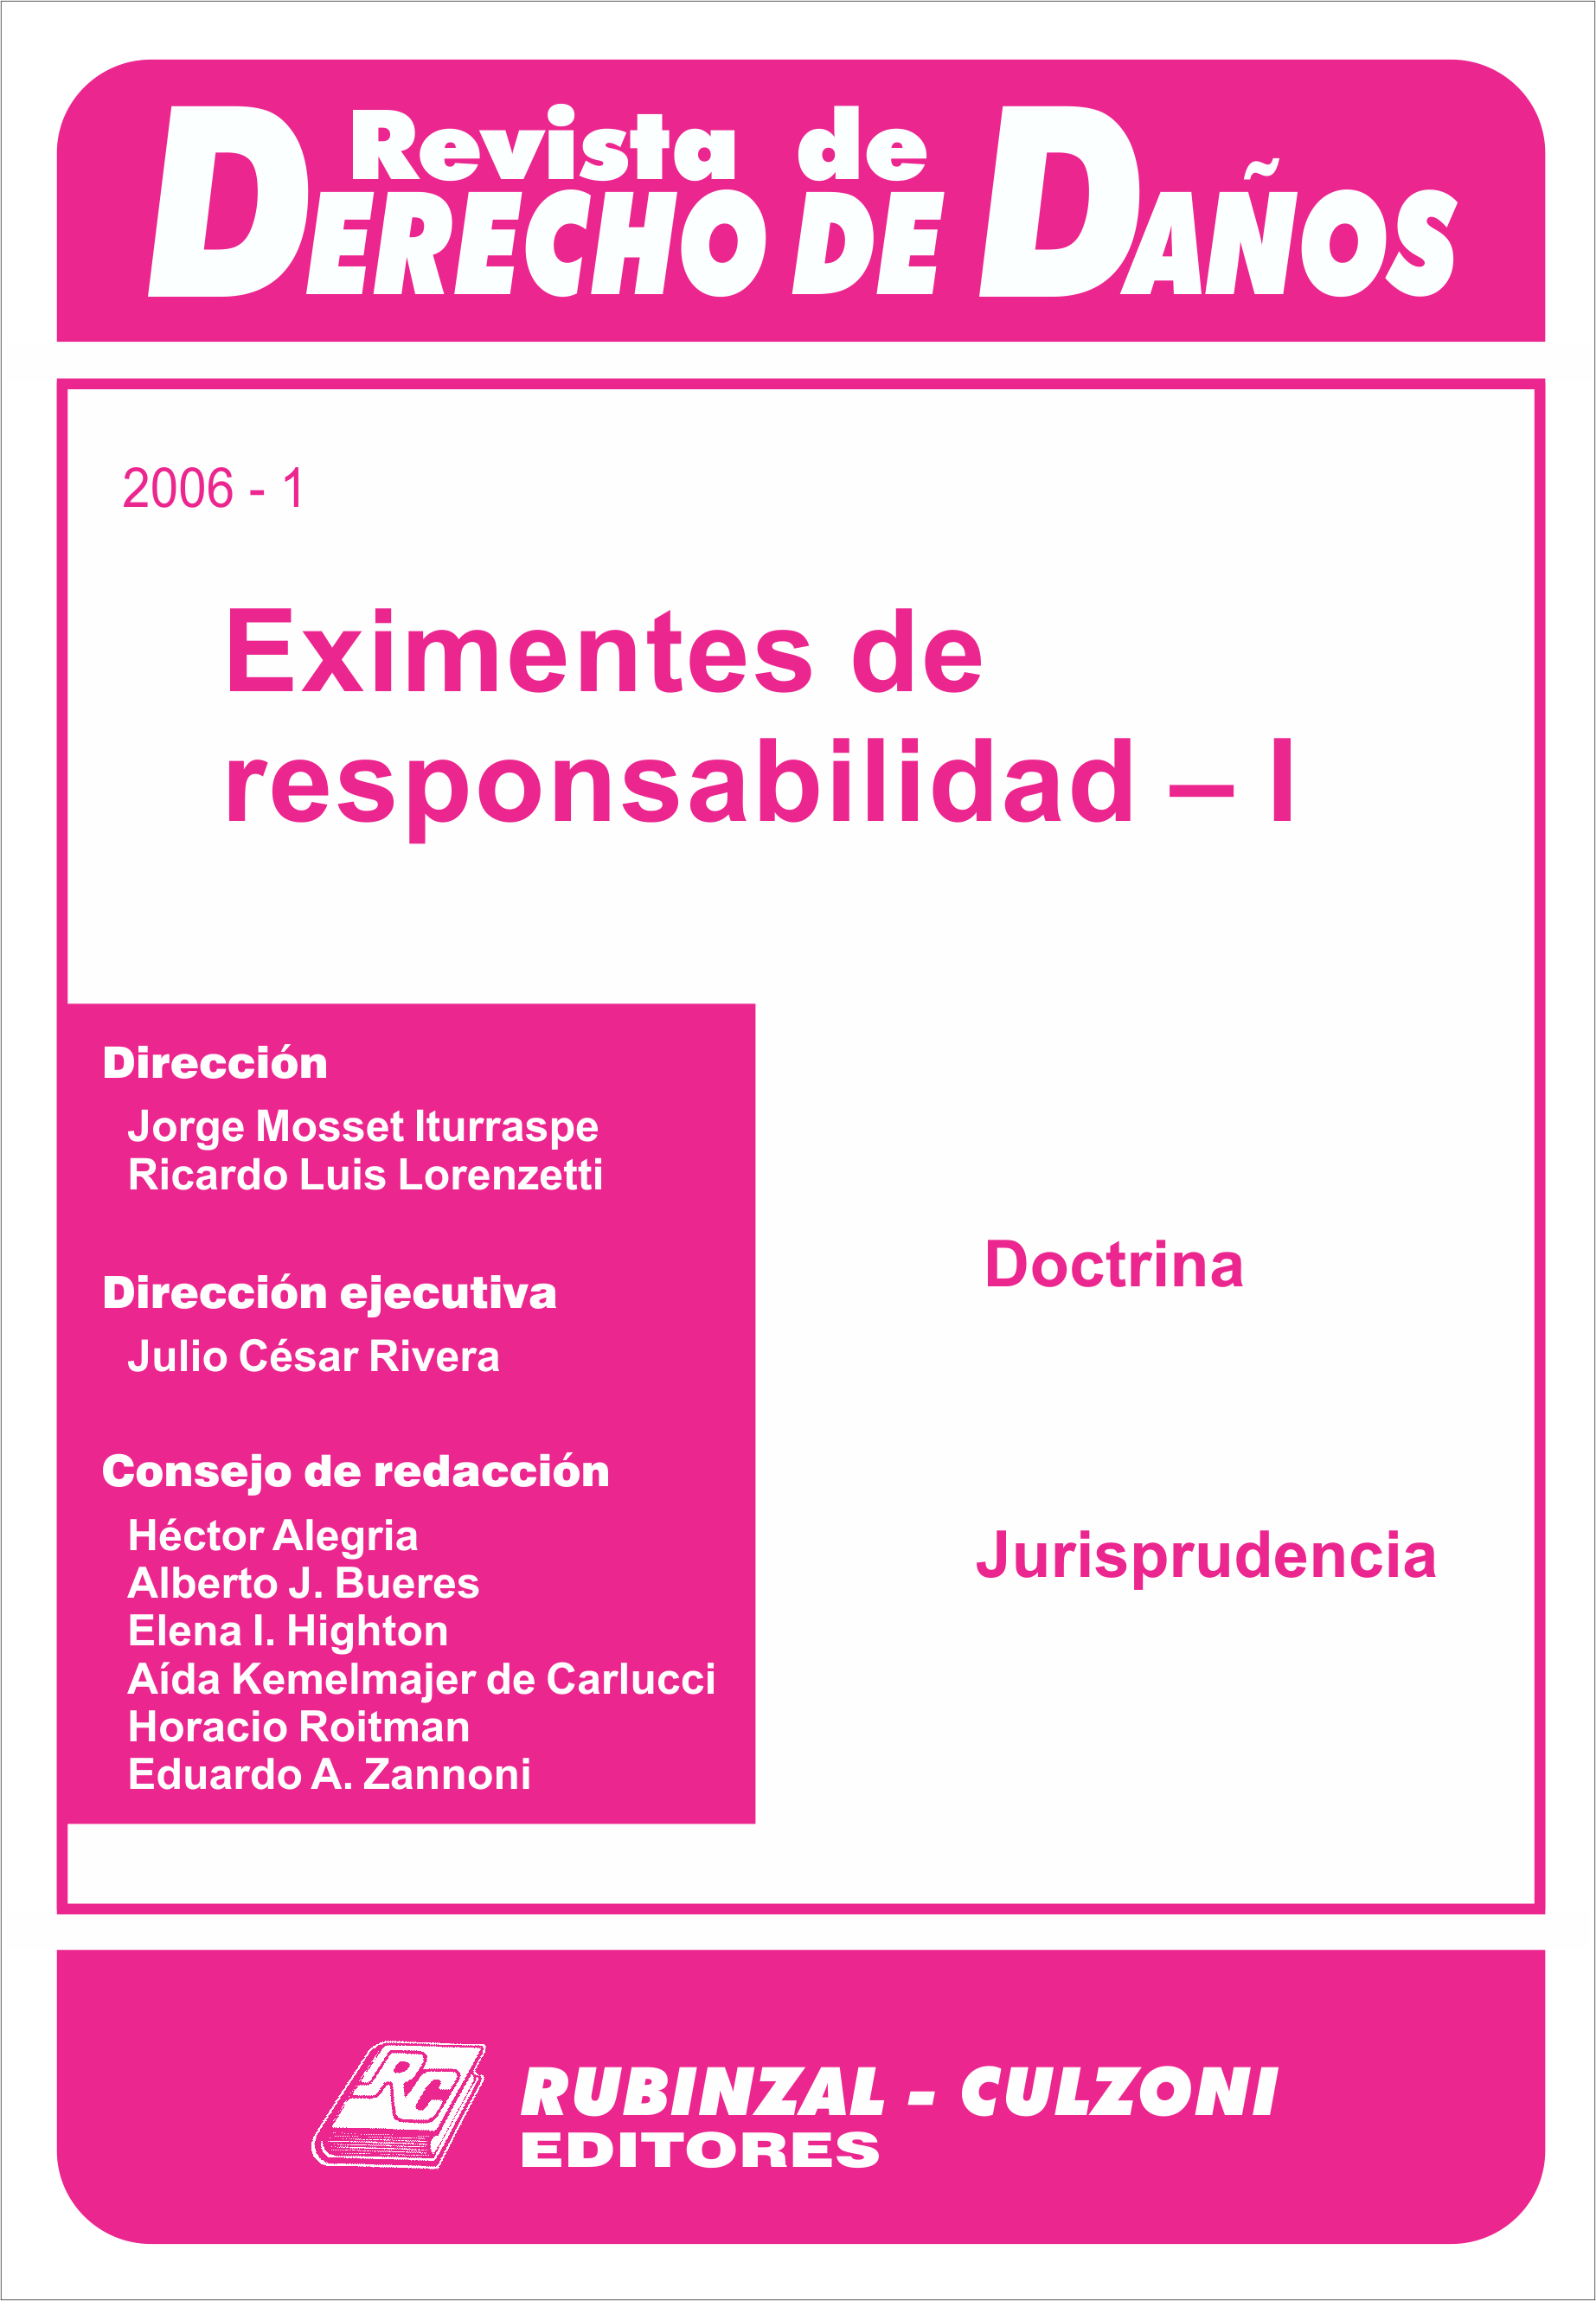 Eximentes de responsabilidad - I. [2006-1]